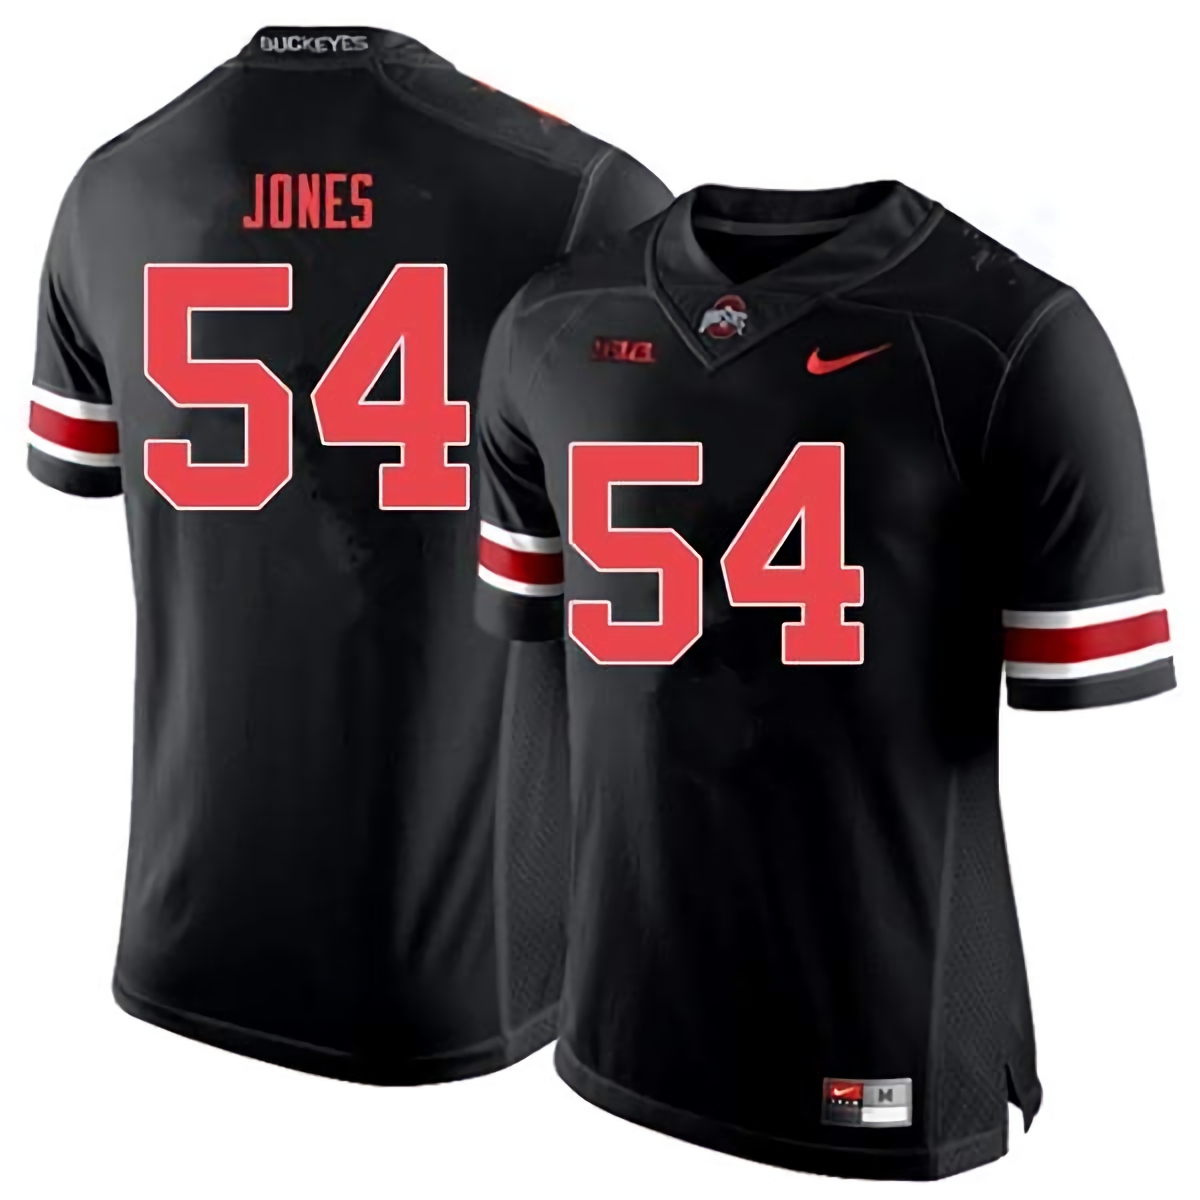 Matthew Jones Ohio State Buckeyes Men's NCAA #54 Nike Black Out College Stitched Football Jersey IGS0156JQ